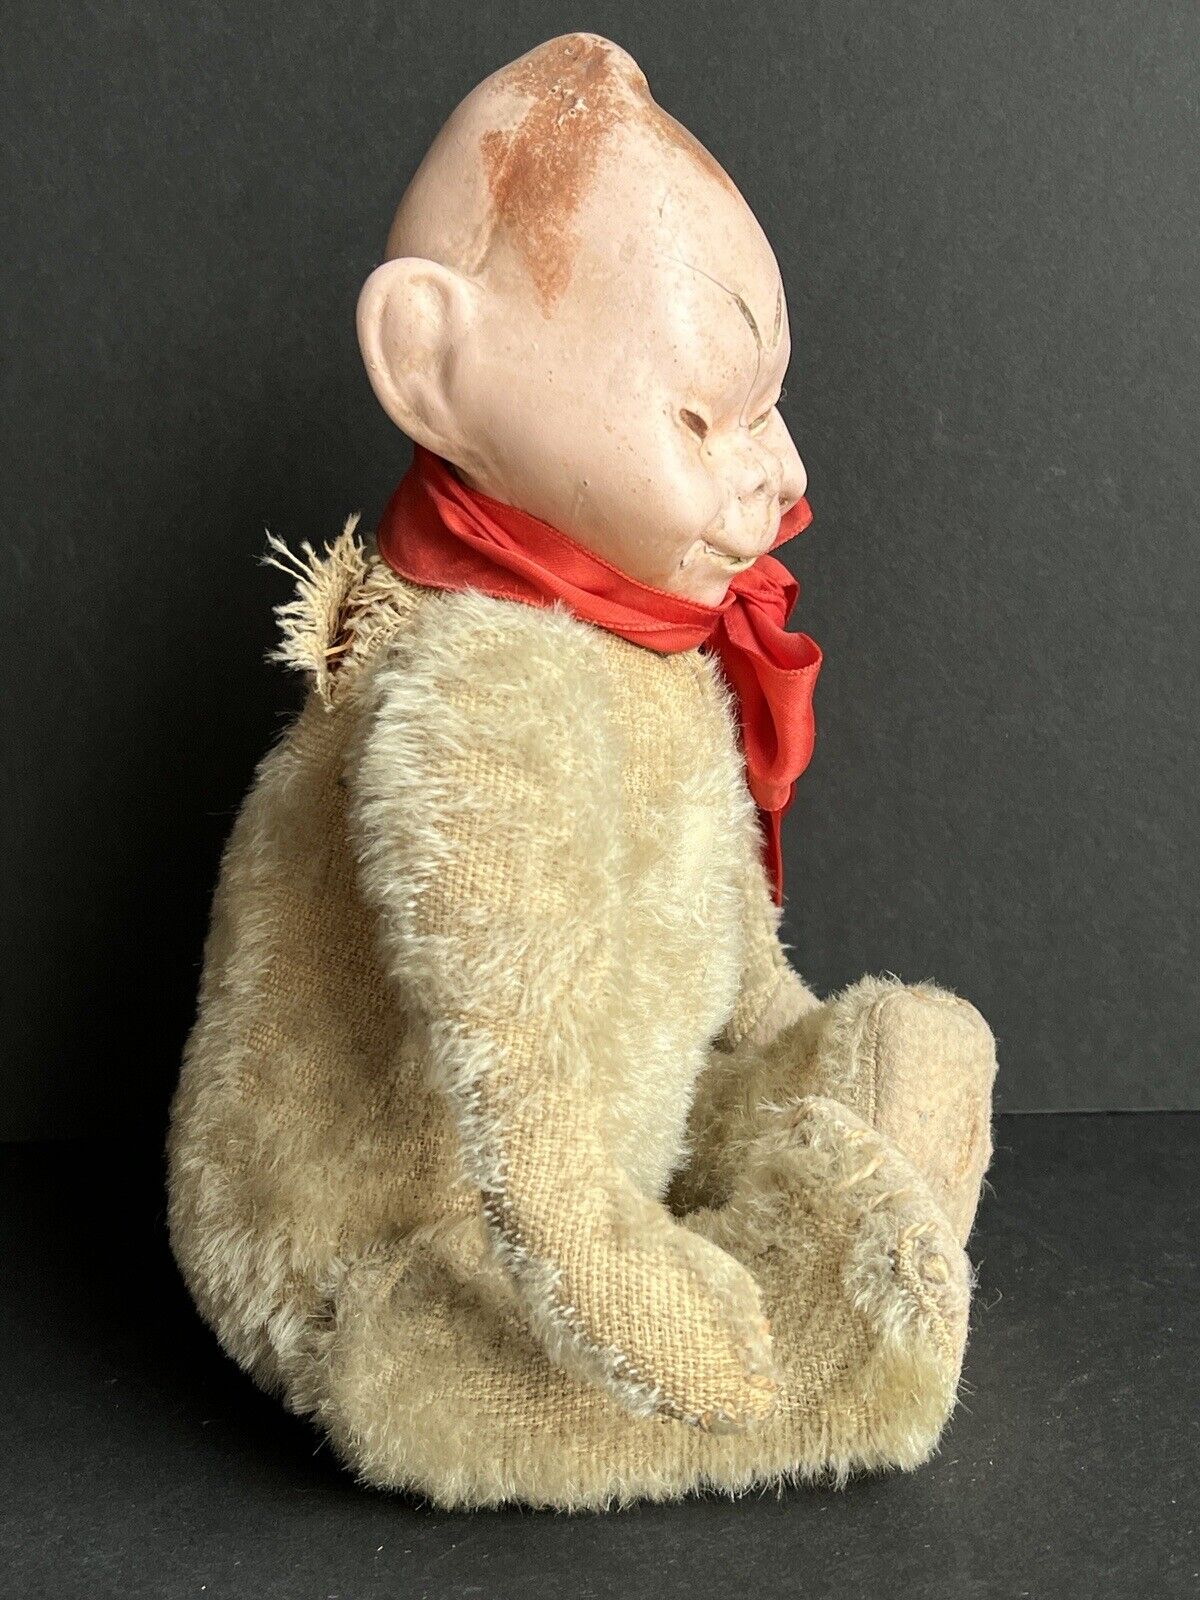 Rare Original Horsman 11” Composition Plush Billiken Jointed Toy Doll